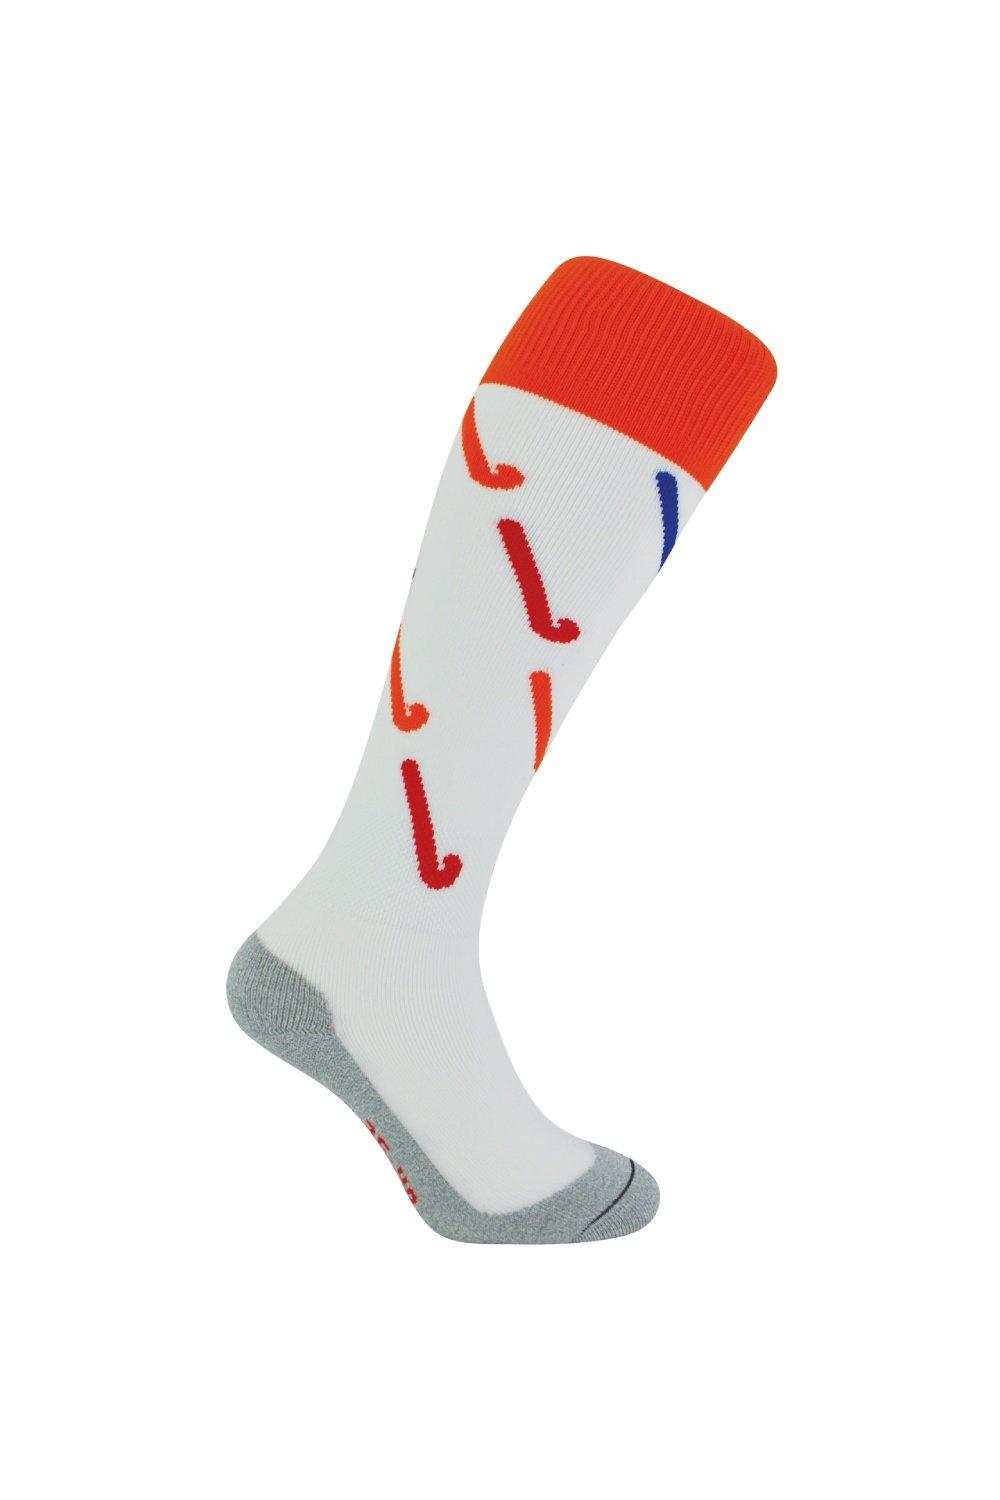 Long Sport Hockey Socks with Hockey Stick Designs